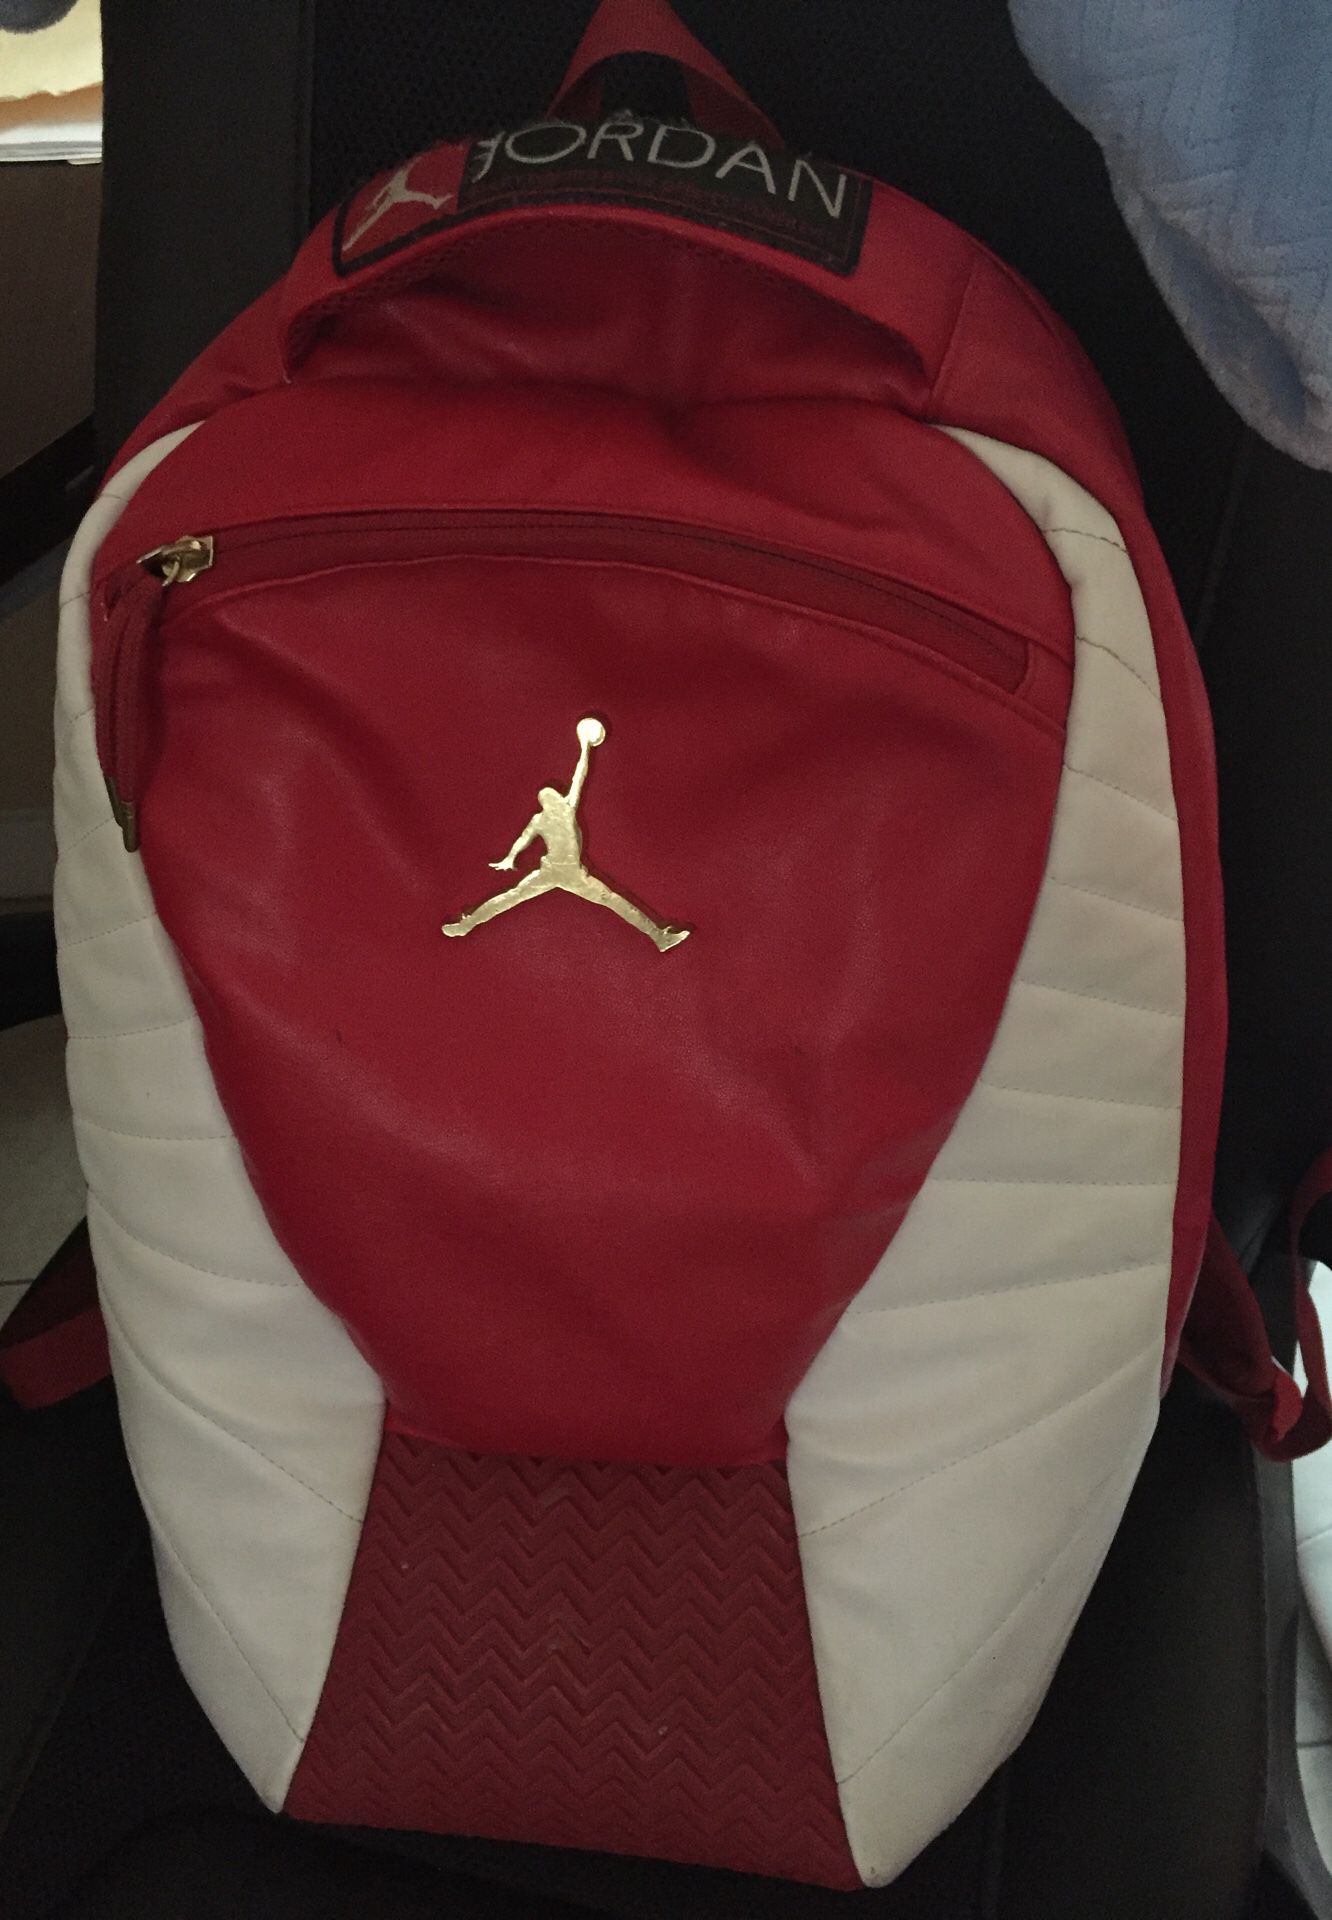 Red Jordan backpack